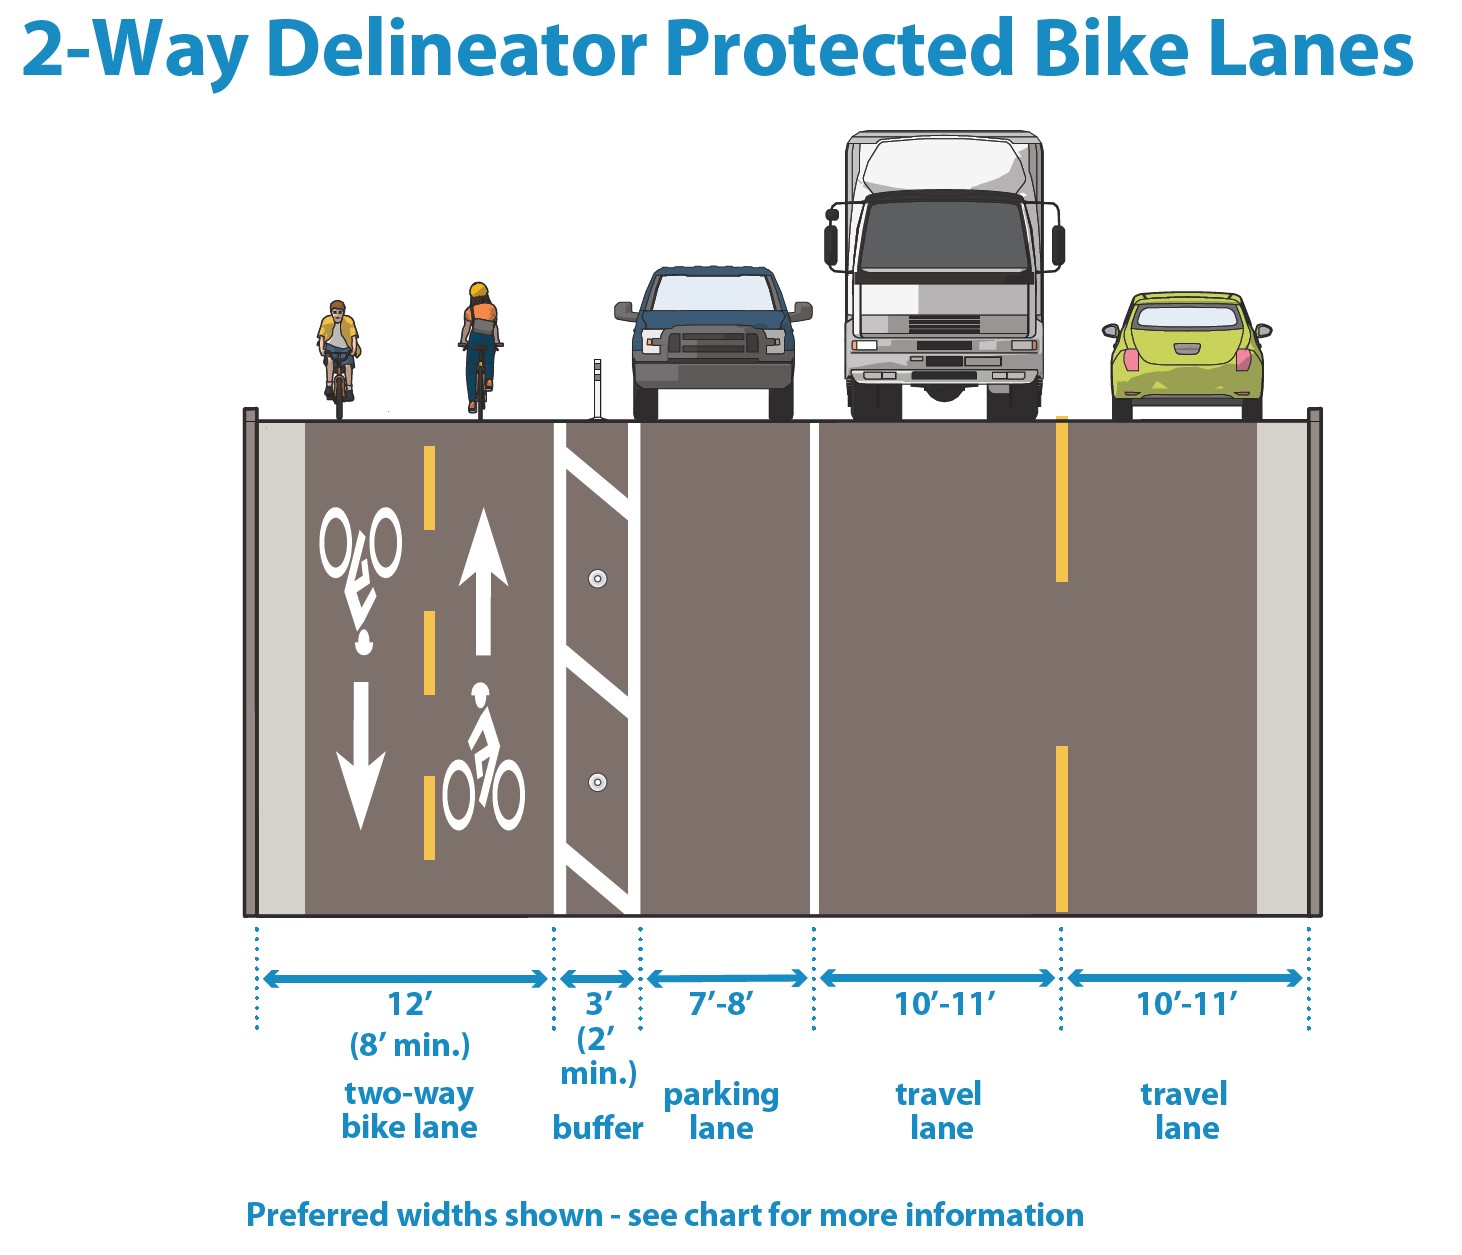 3.4D Delineator Protected Bike Lane Graphic 2.jpg